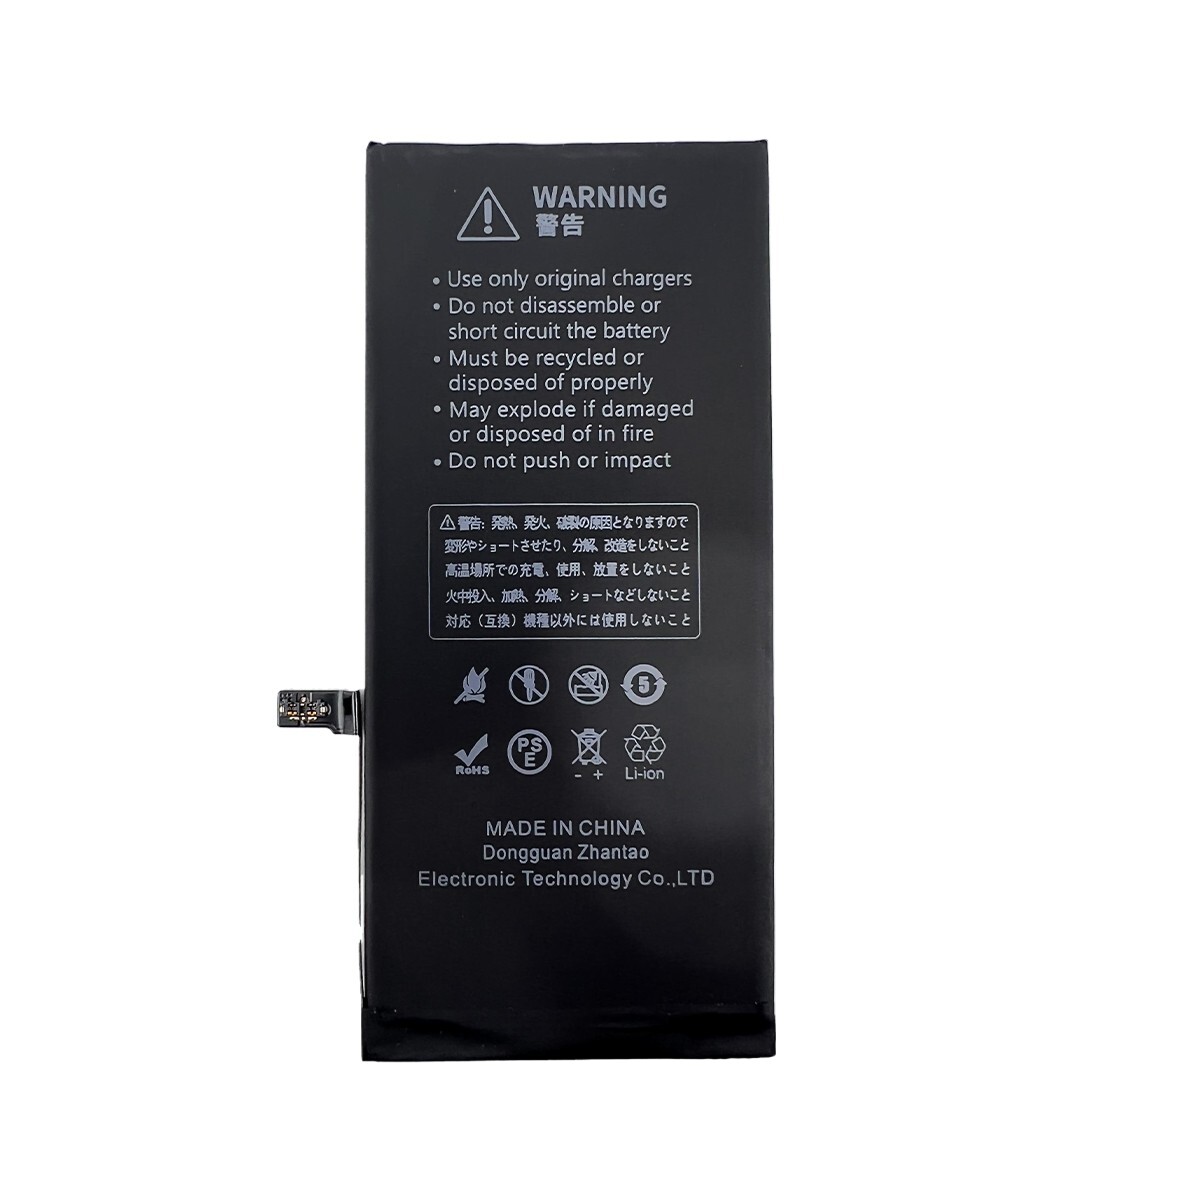 iPhone7plus 用 高品質 内臓バッテリー 交換 PSE認証 専用 工具 両面テープ・防水シール付 電池パック 交換 修理 3.7v 純正 同等品の画像2